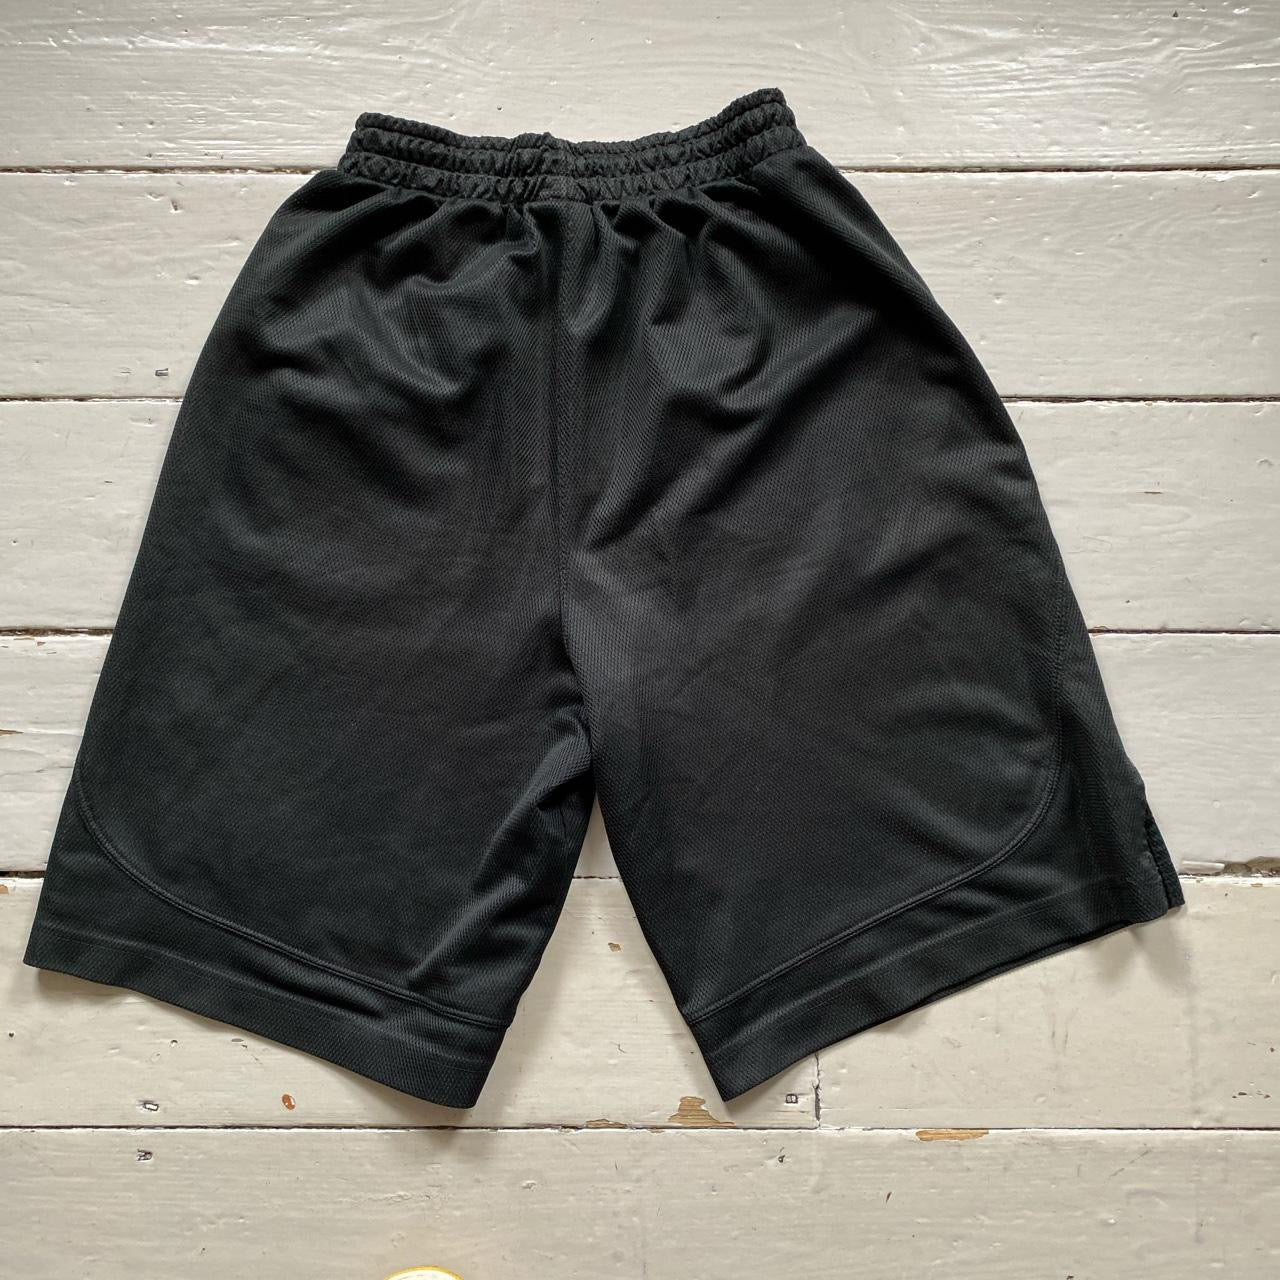 Jordan Black Basketball Shorts (Small)